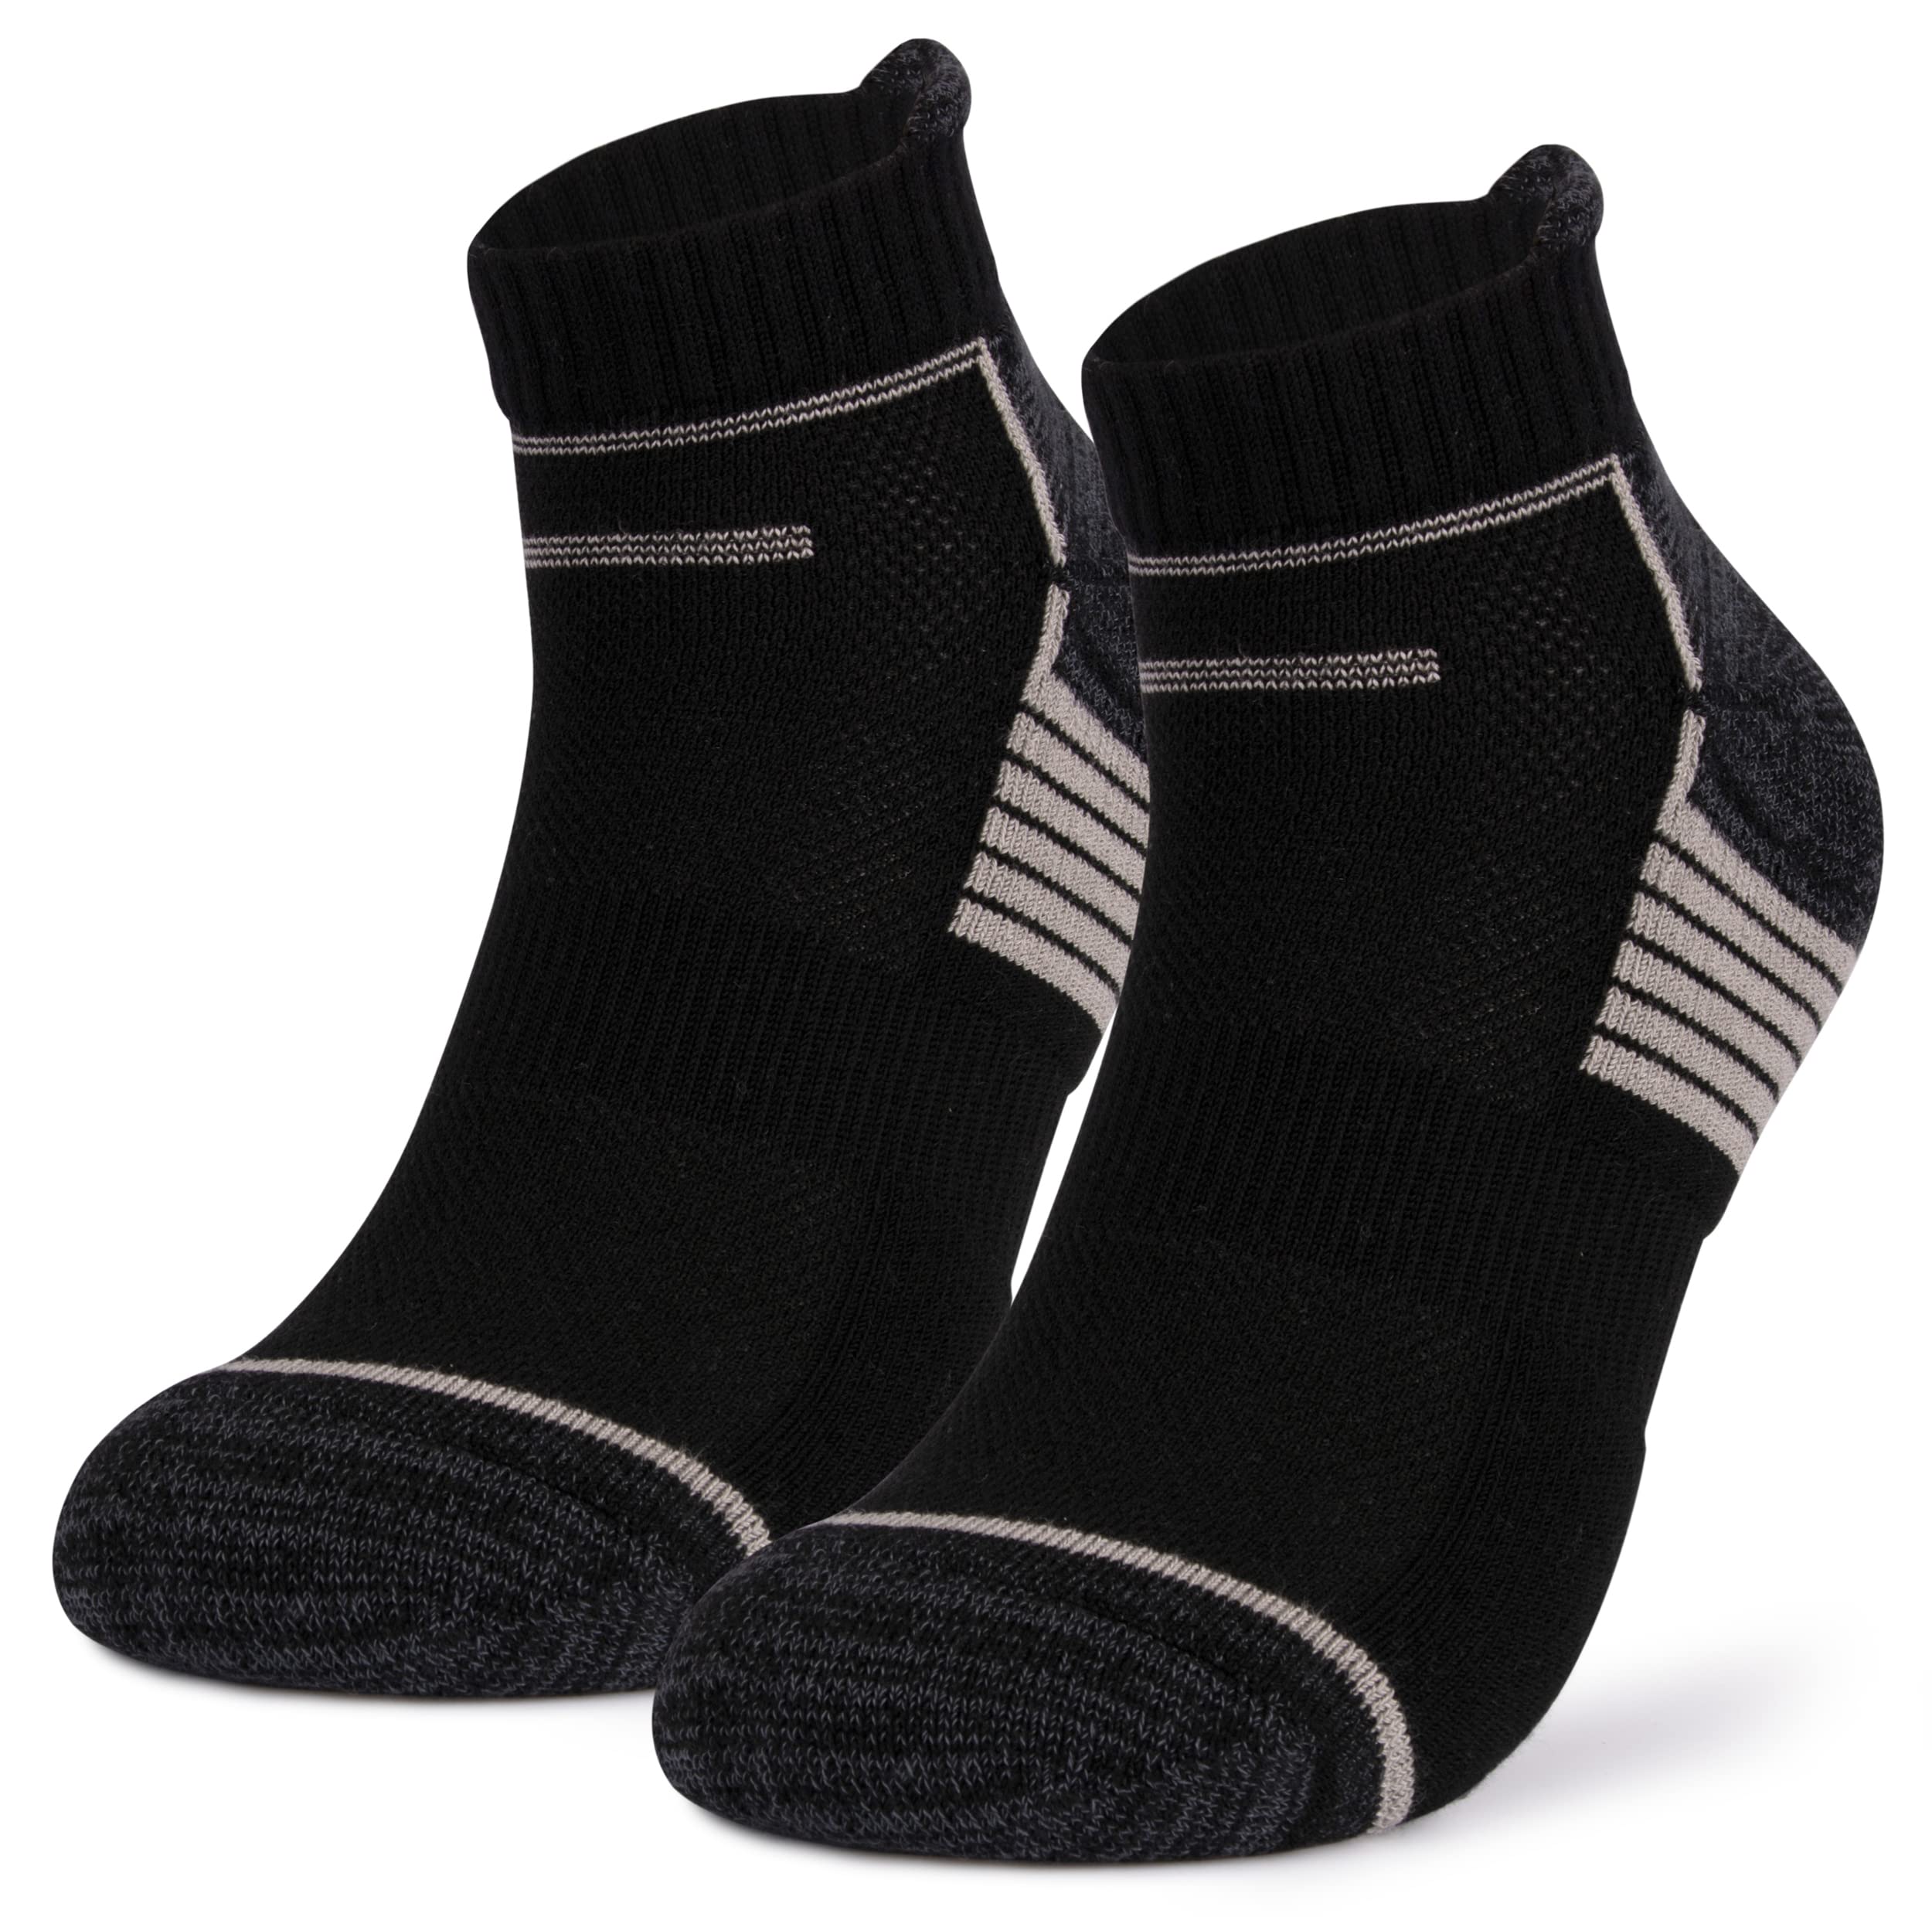 Mush Bamboo Performance Socks for Sports & Casual Wear-Ultra Soft